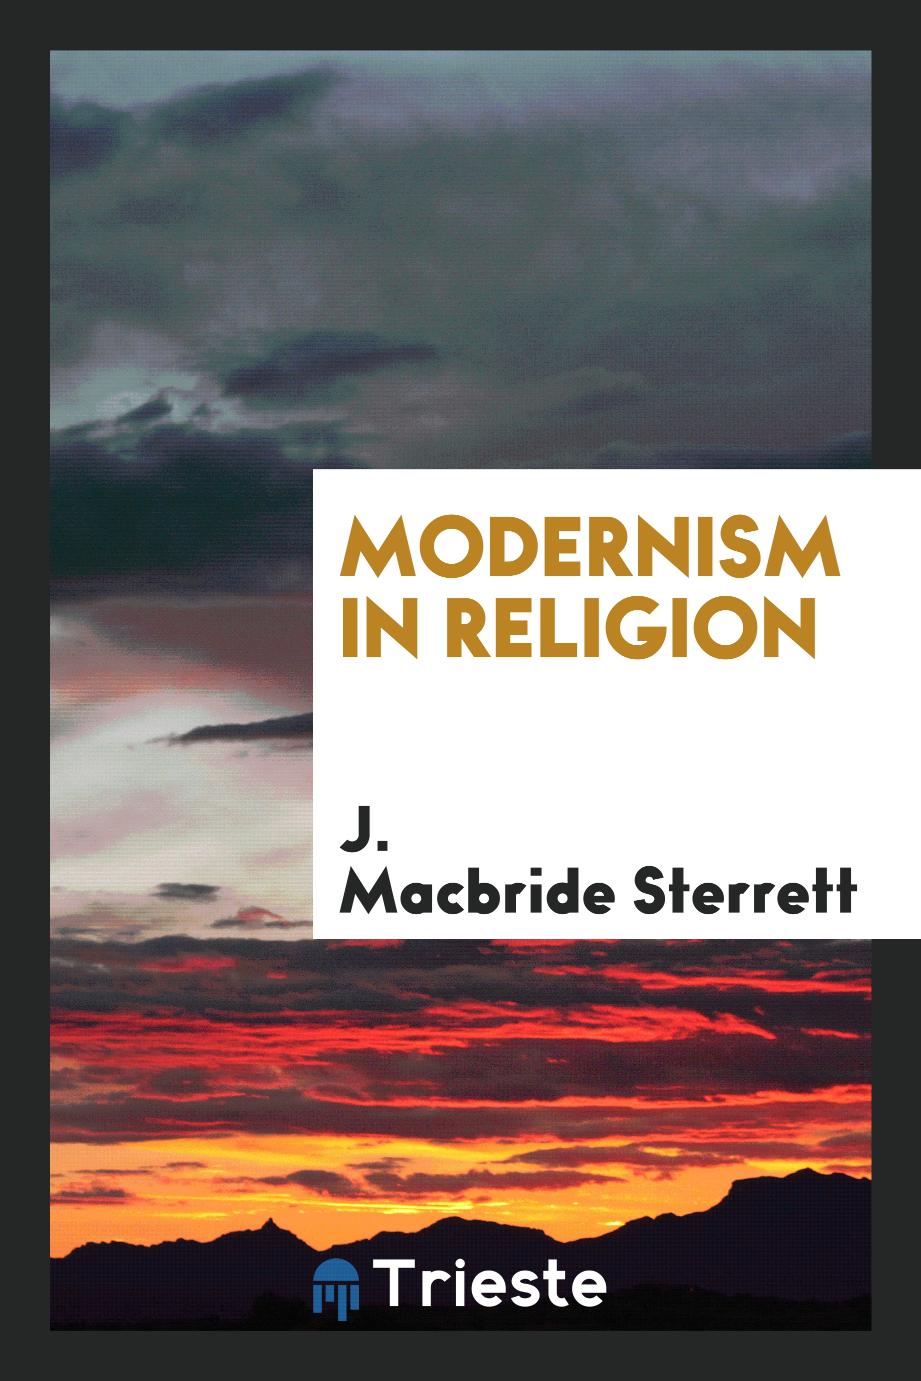 Modernism in religion